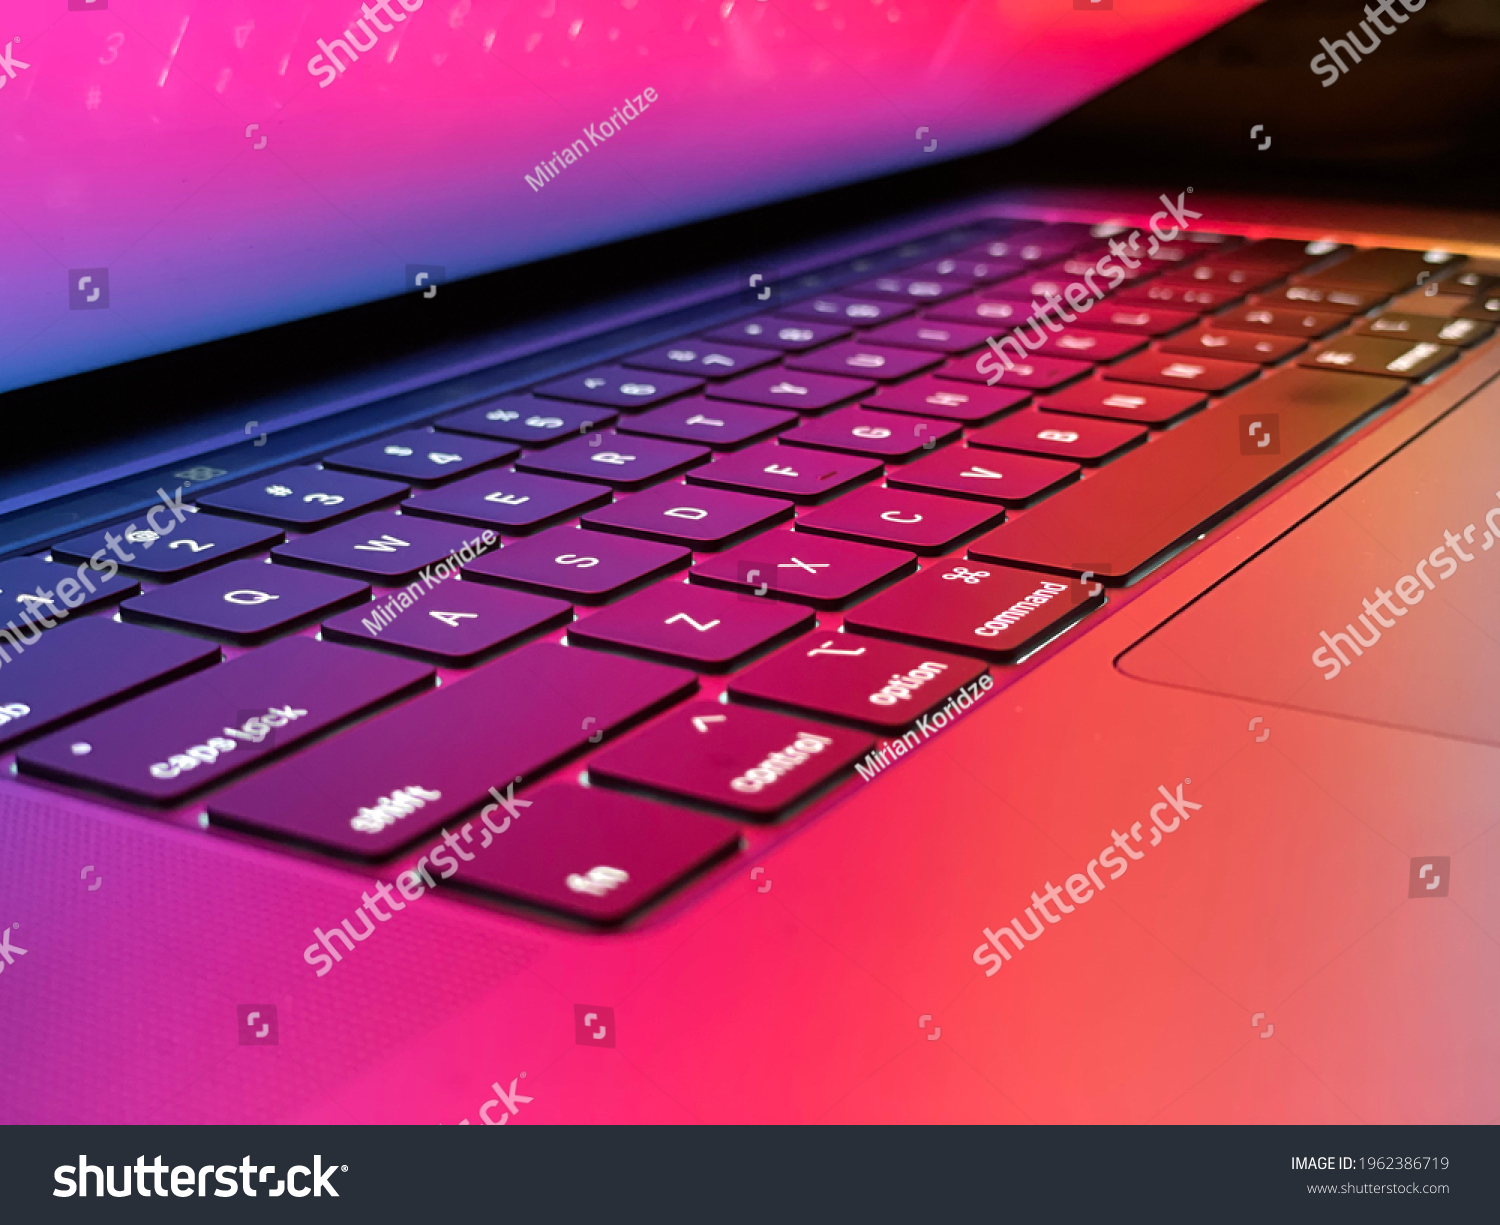 Beautiful Colorful Laptop Computer Keyboard #1962386719